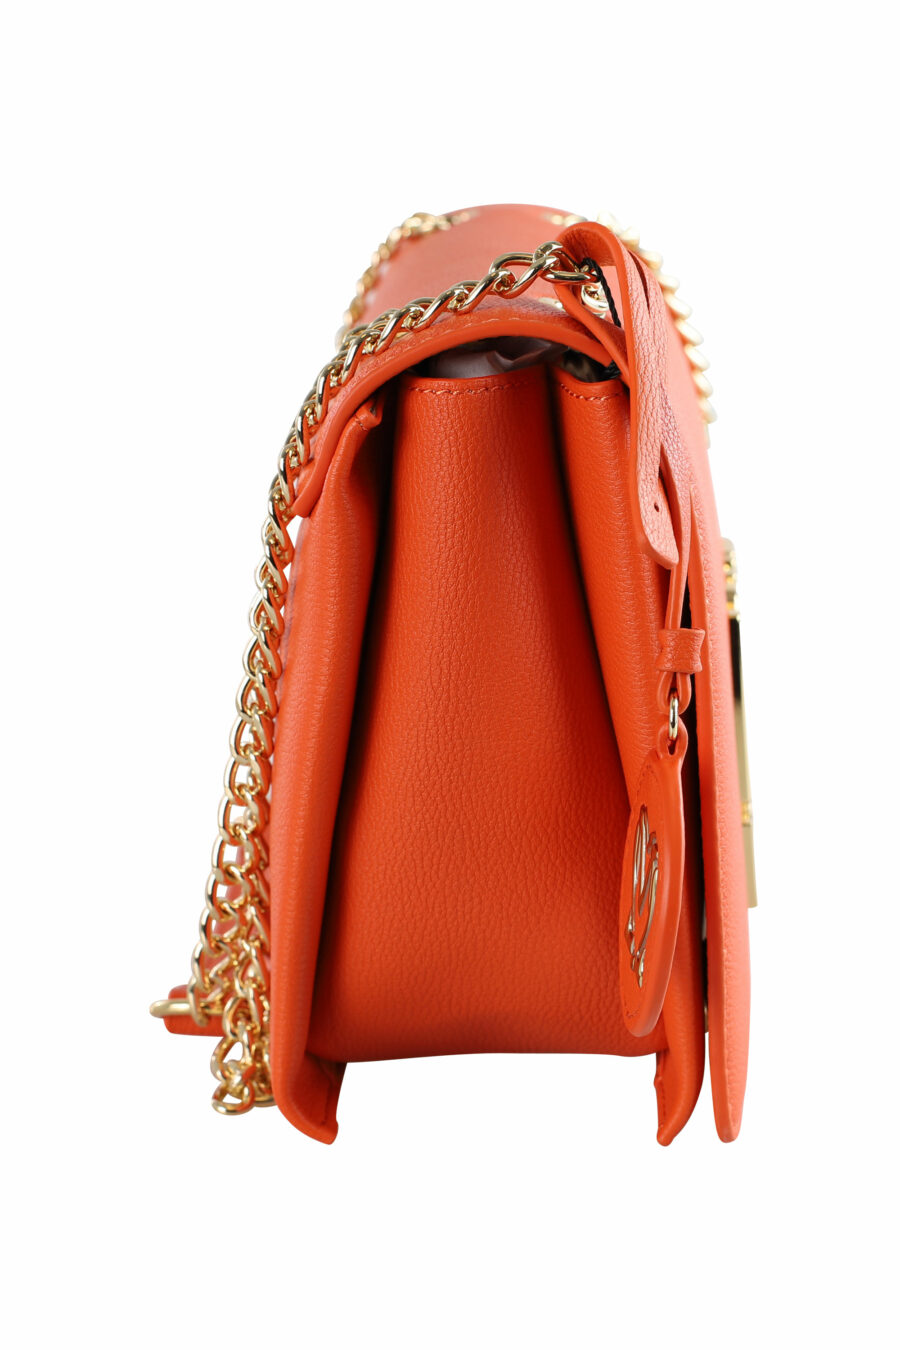 Orange shoulder bag with chain and lettering logo - IMG 3655